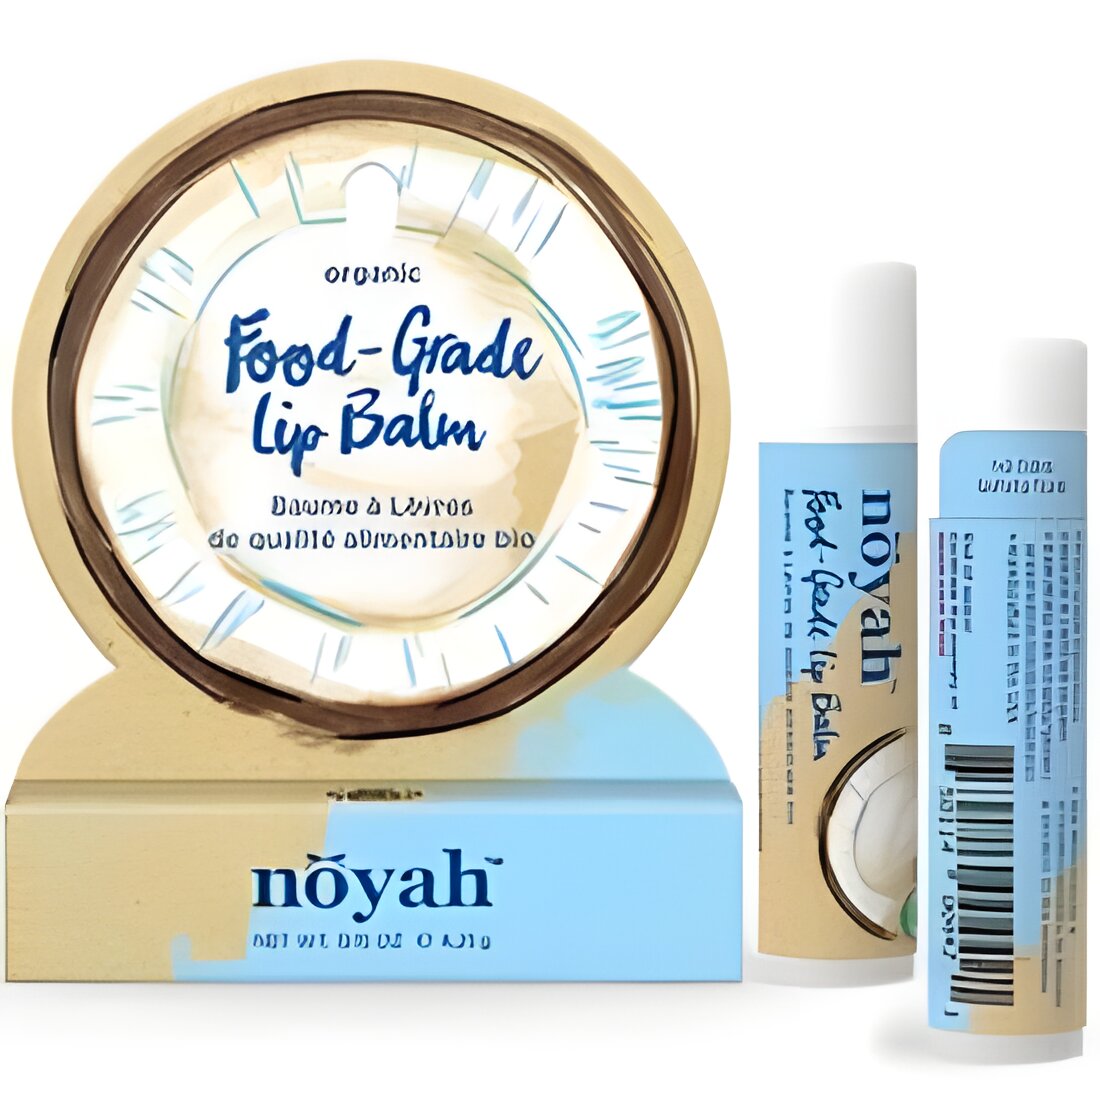 Free Noyah Food-Grade Lip Balm